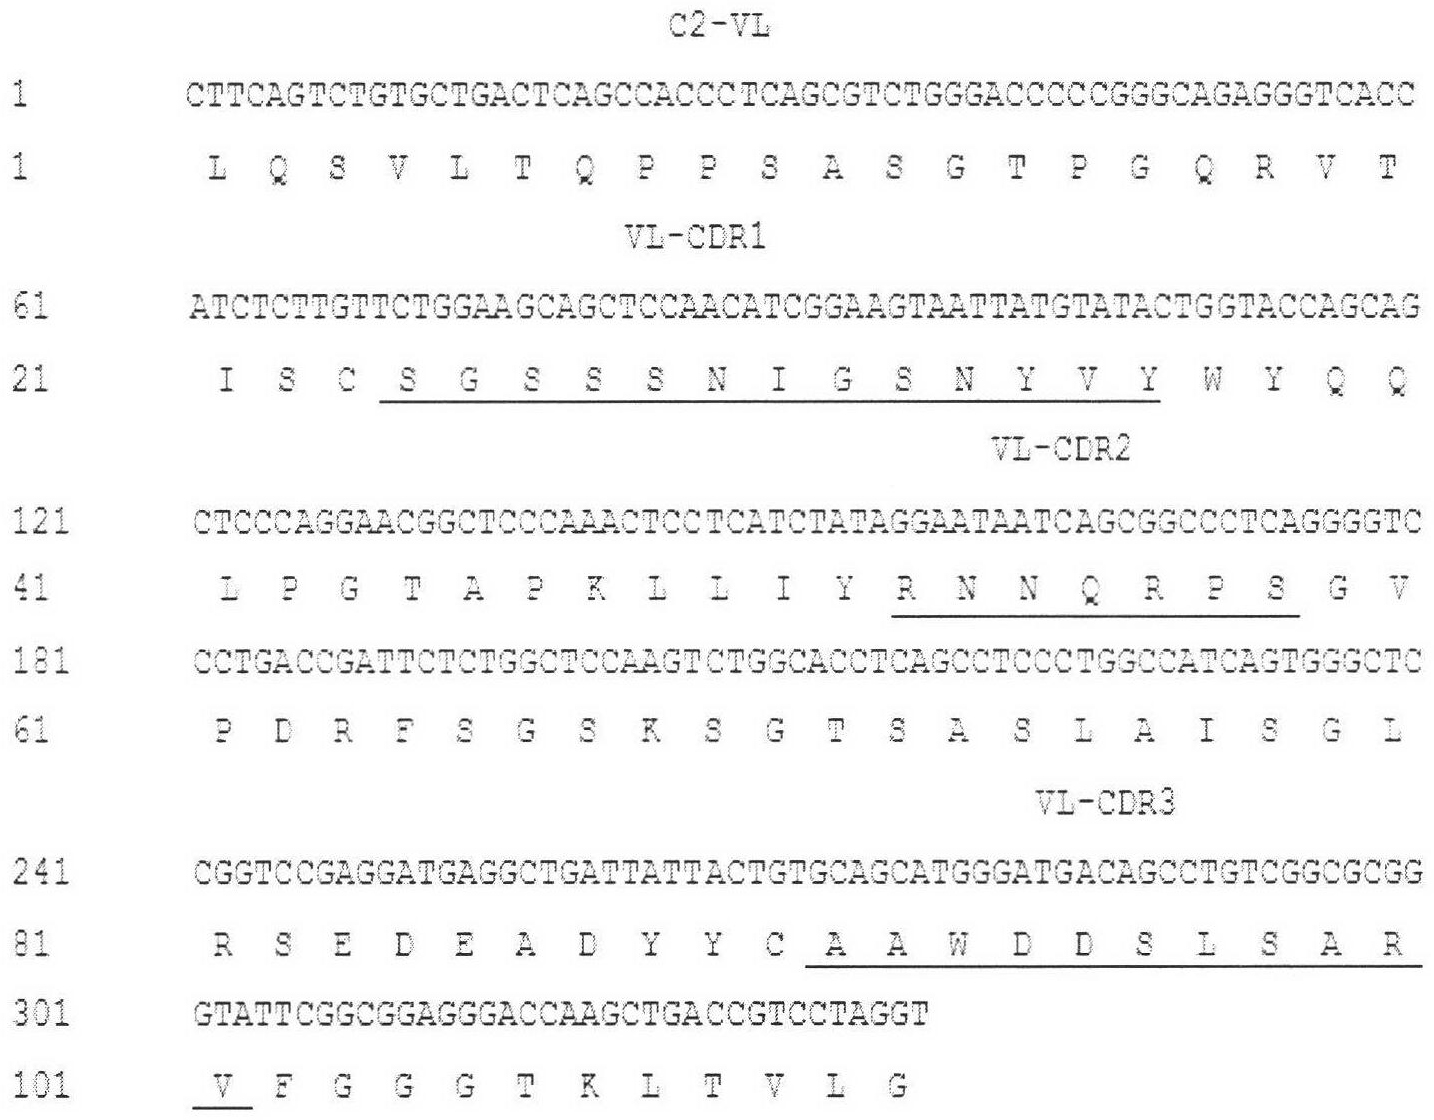 Single-chain antibody of fully-human anti-human interleukin-21 receptor and application thereof